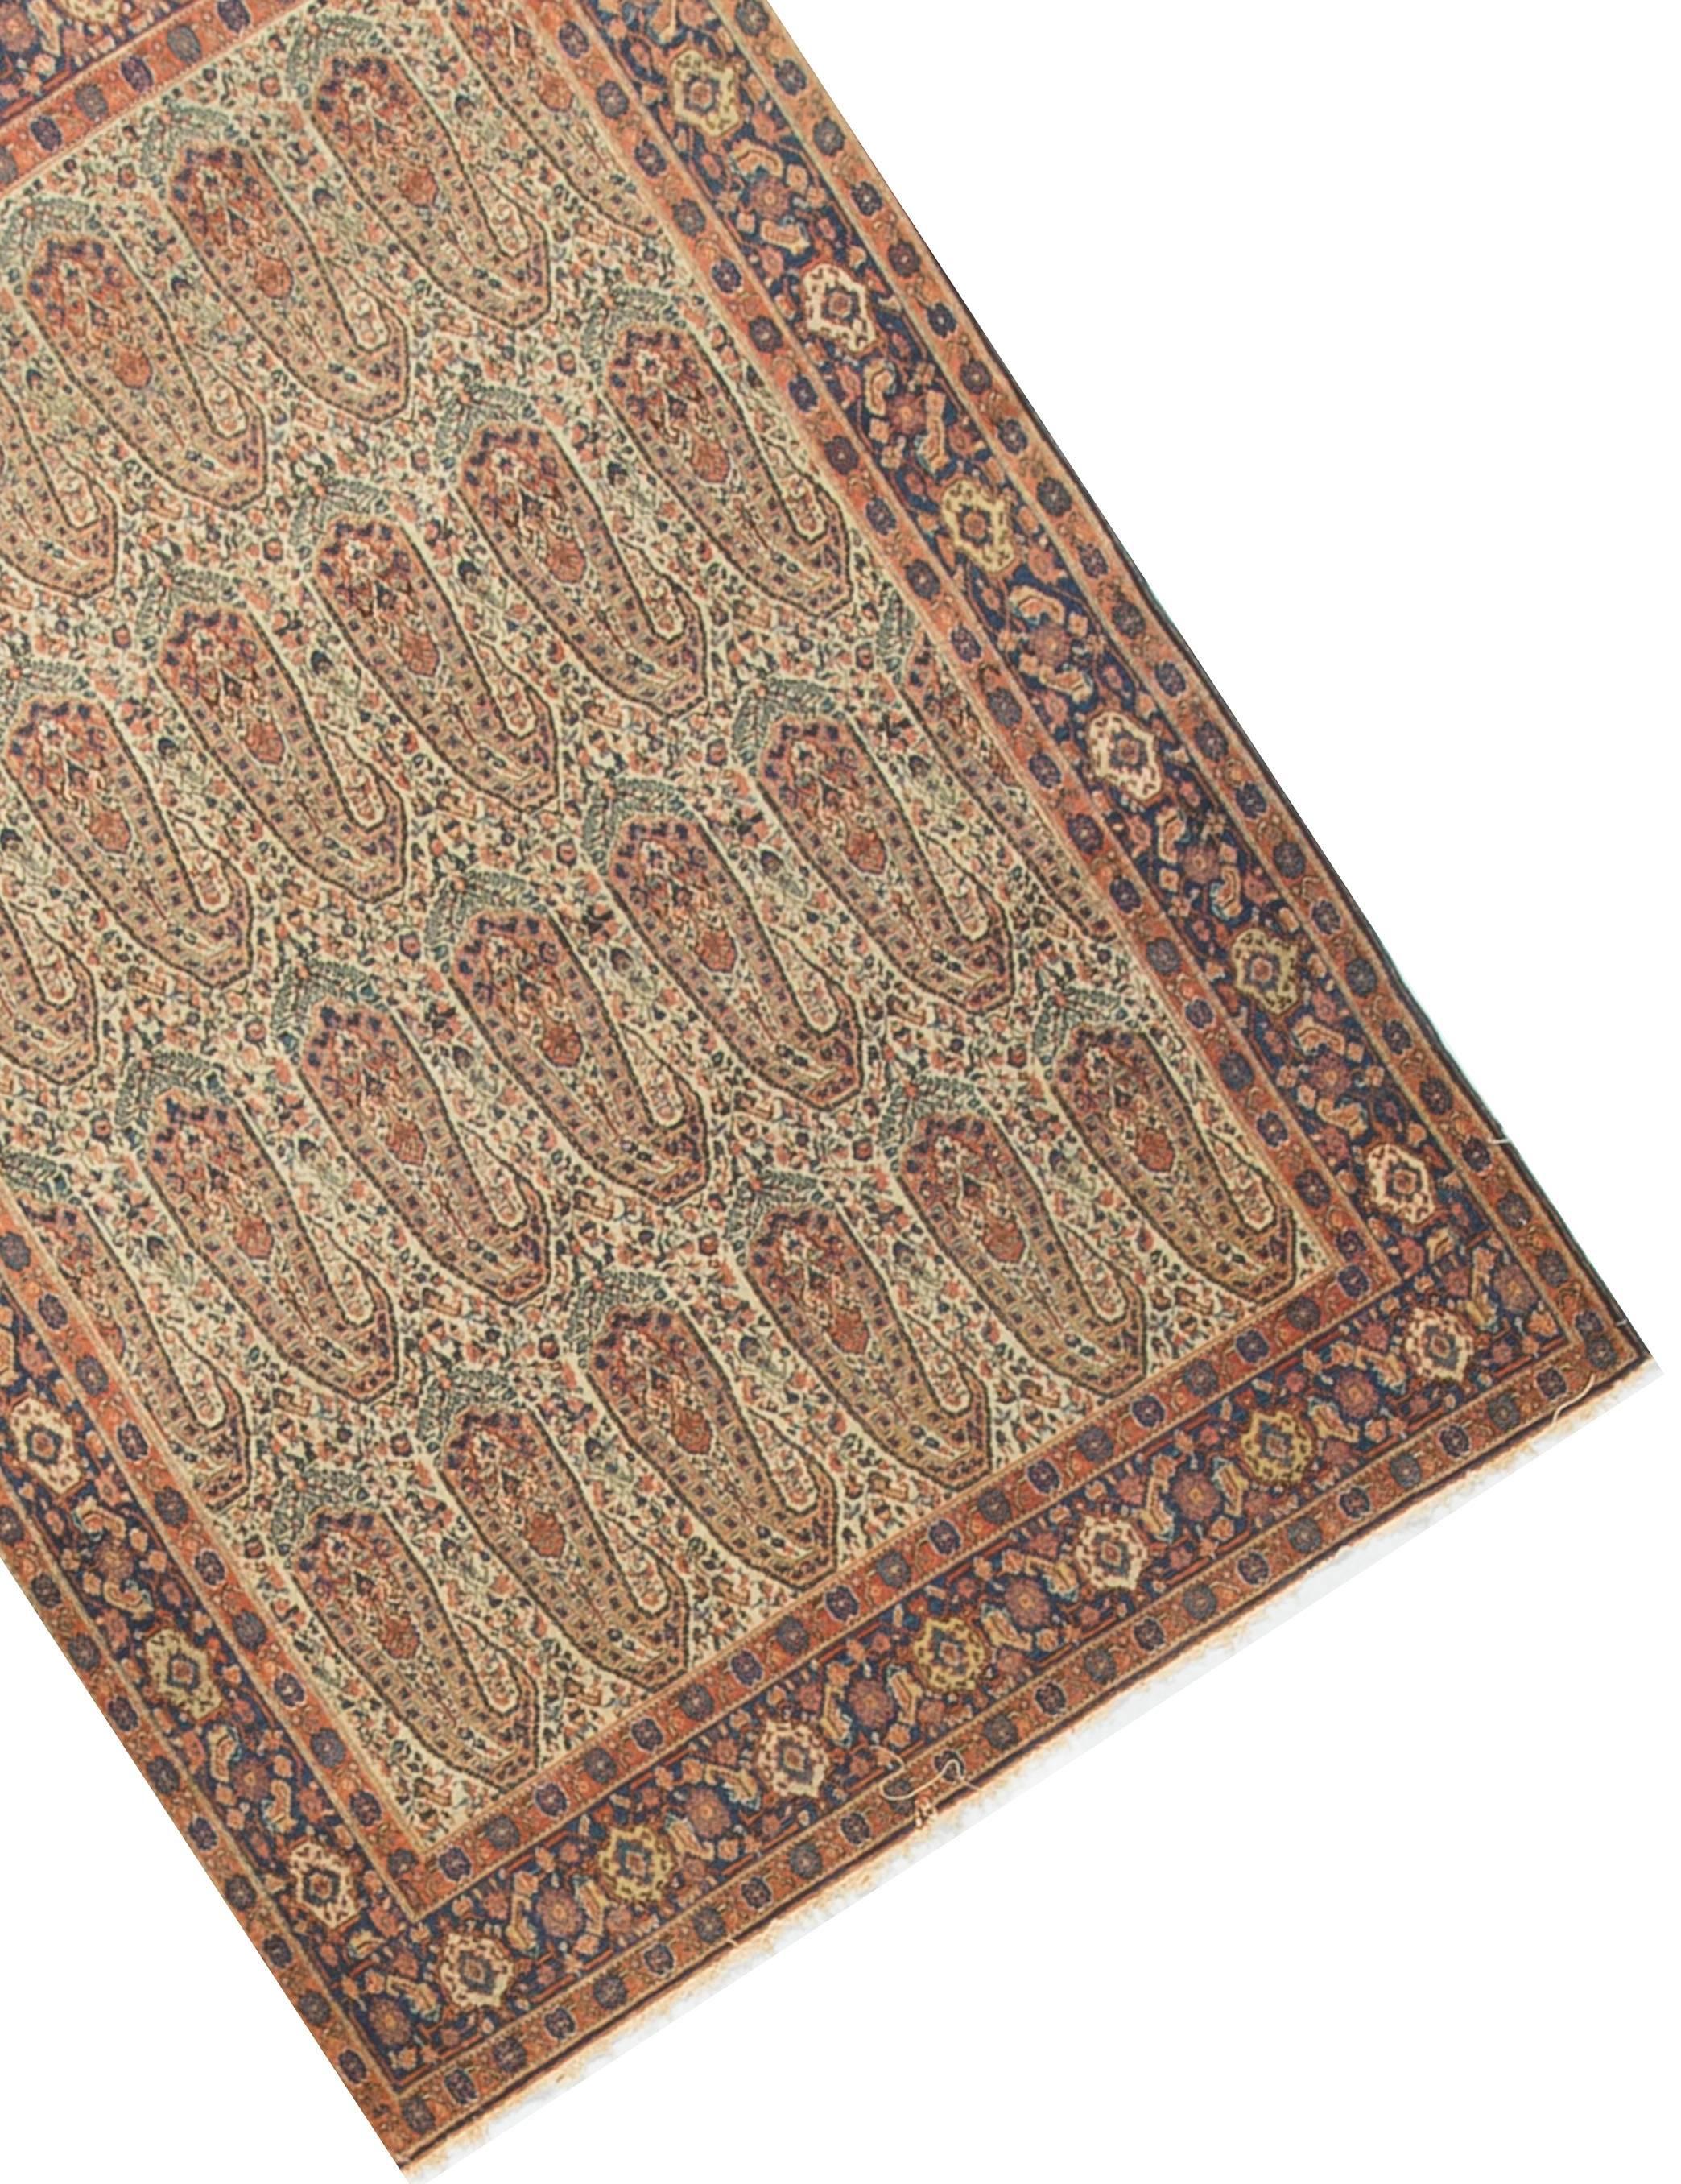 Hand-Woven Antique Persian Senneh Rug circa 1880 For Sale